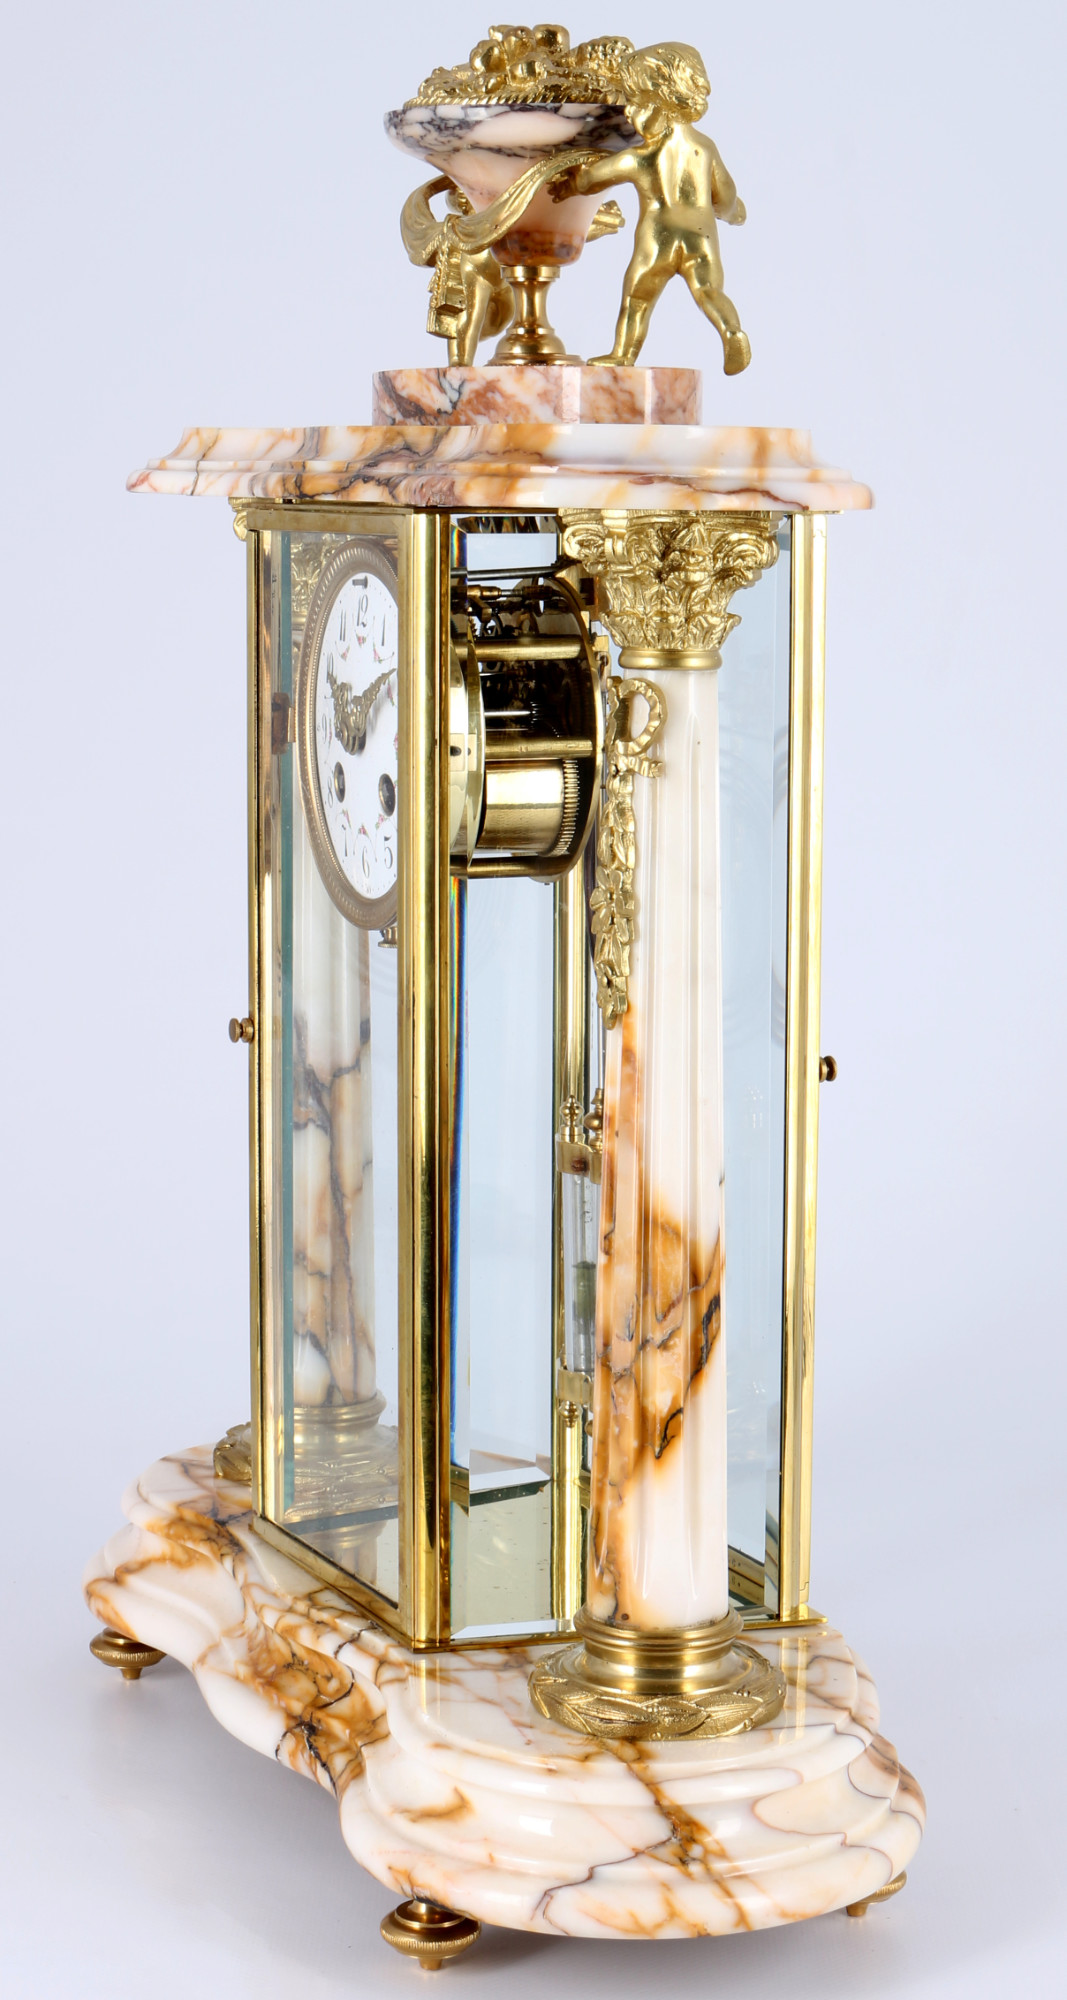 French glas mantel clock 19th century, Glaspendule mit Beisteller Frankreich 19. Jahrhundert, - Image 4 of 7